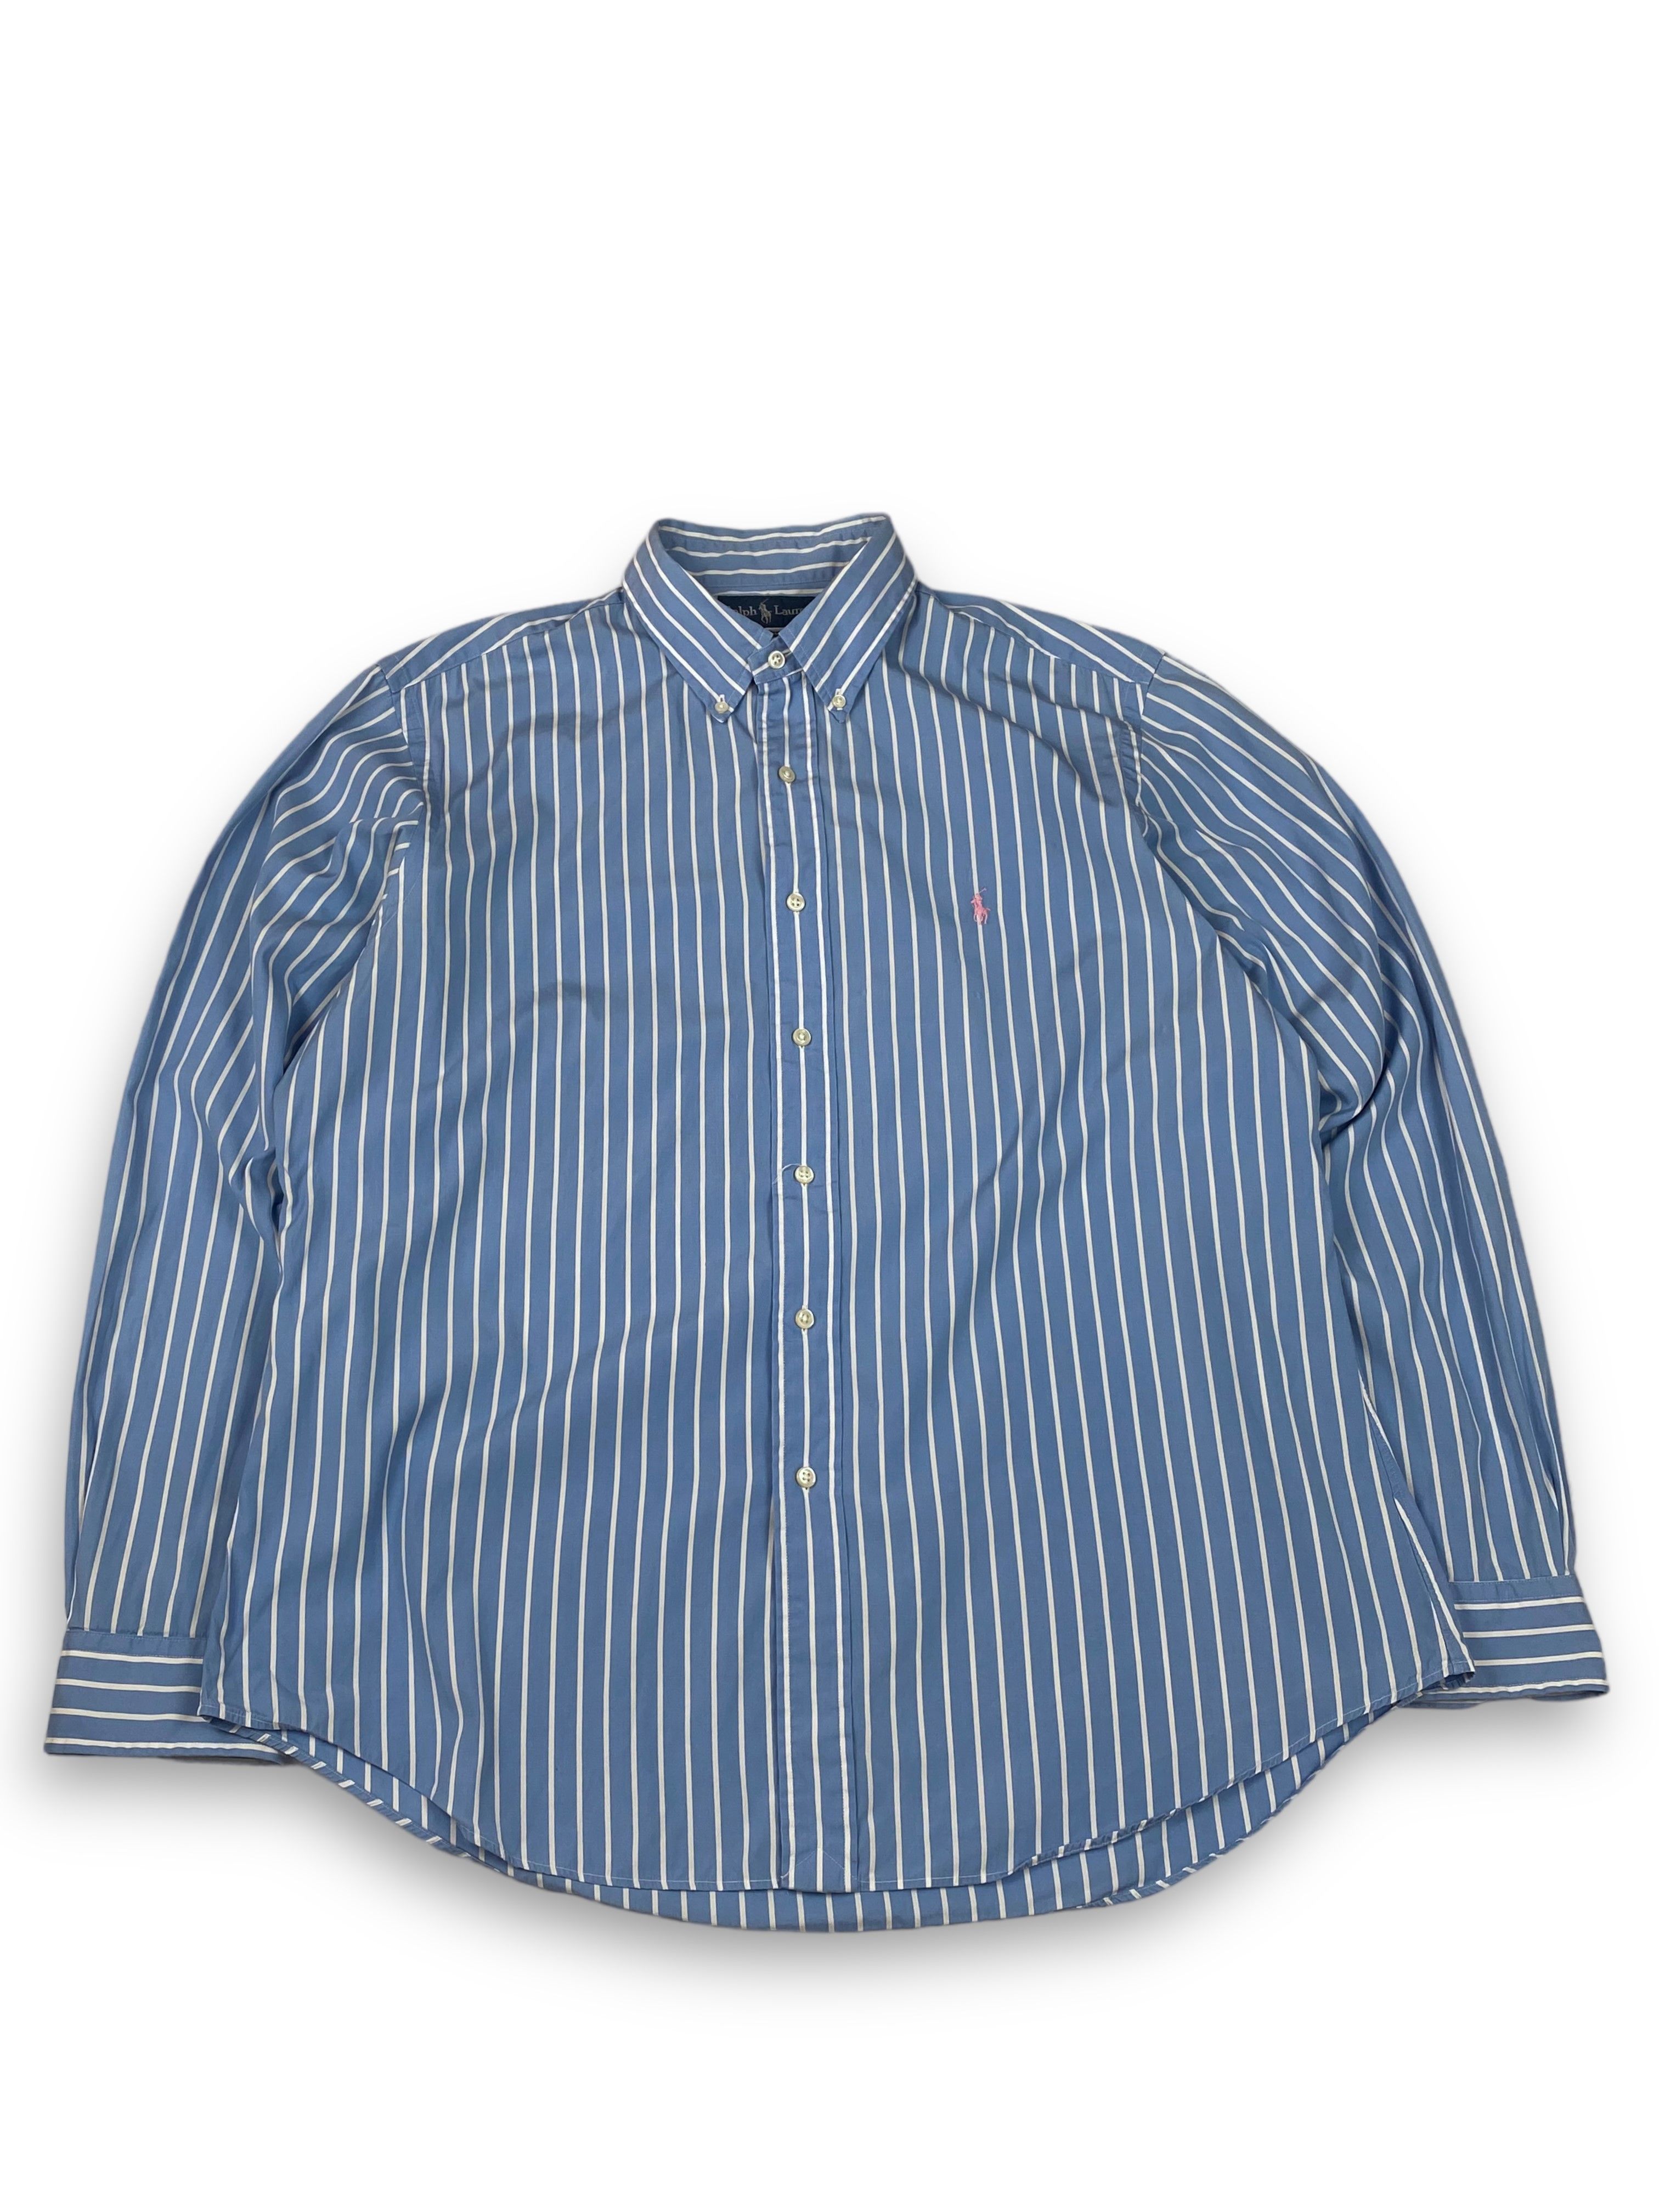 Pre-owned Ralph Lauren X Vintage 90's Vintage Ralph Laurent Striped Blue Button Up Shirt M669 In Blue Striped